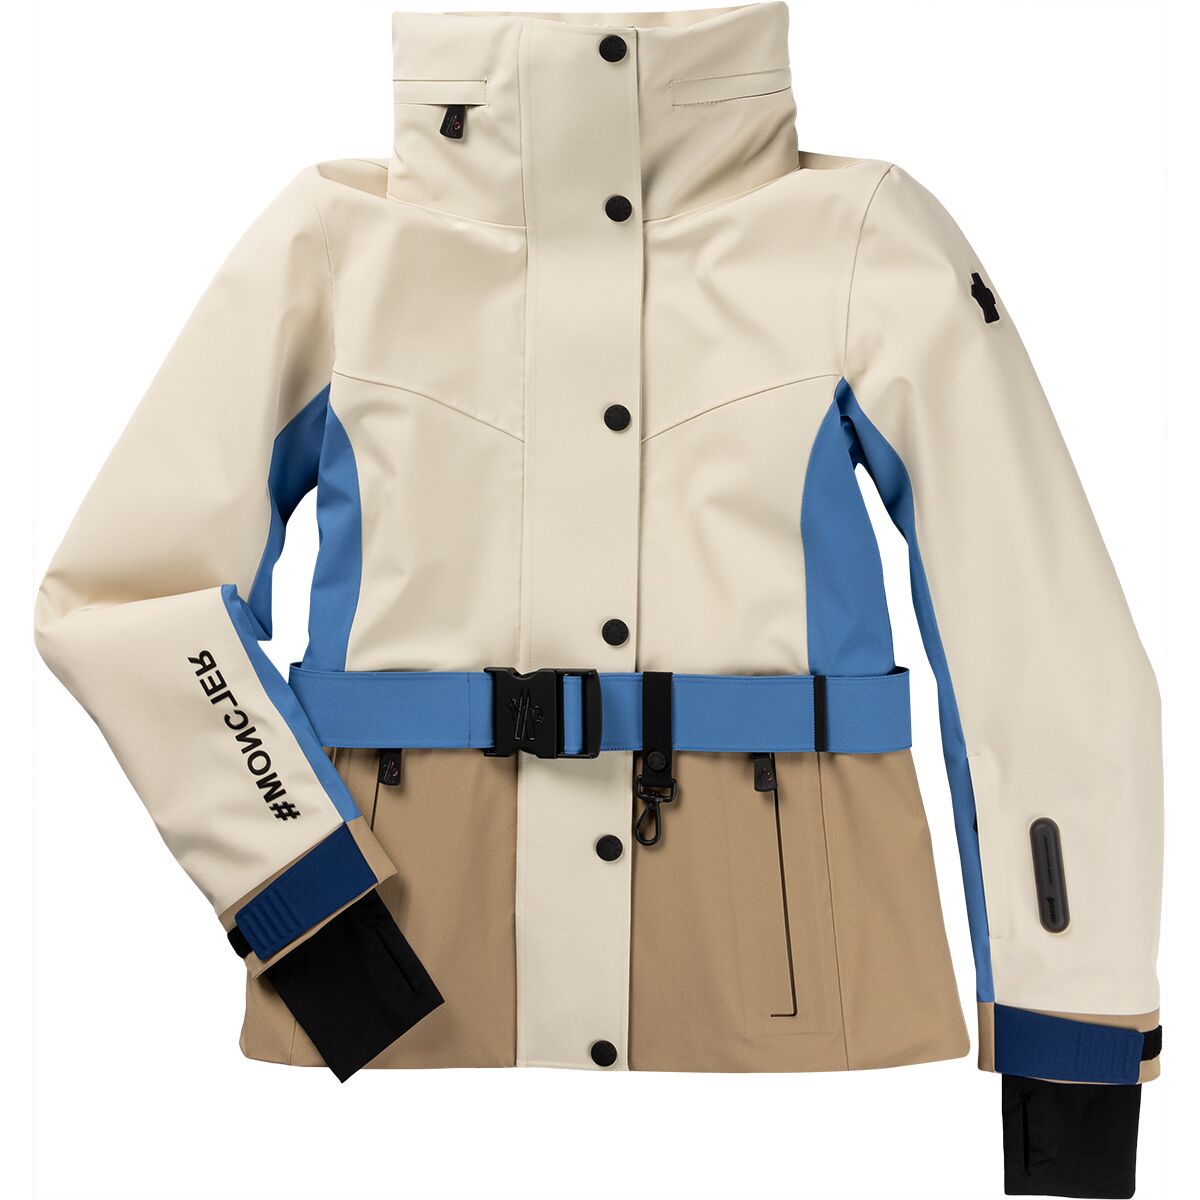 Moncler Grenoble Hainet Jacket - Women's - Clothing